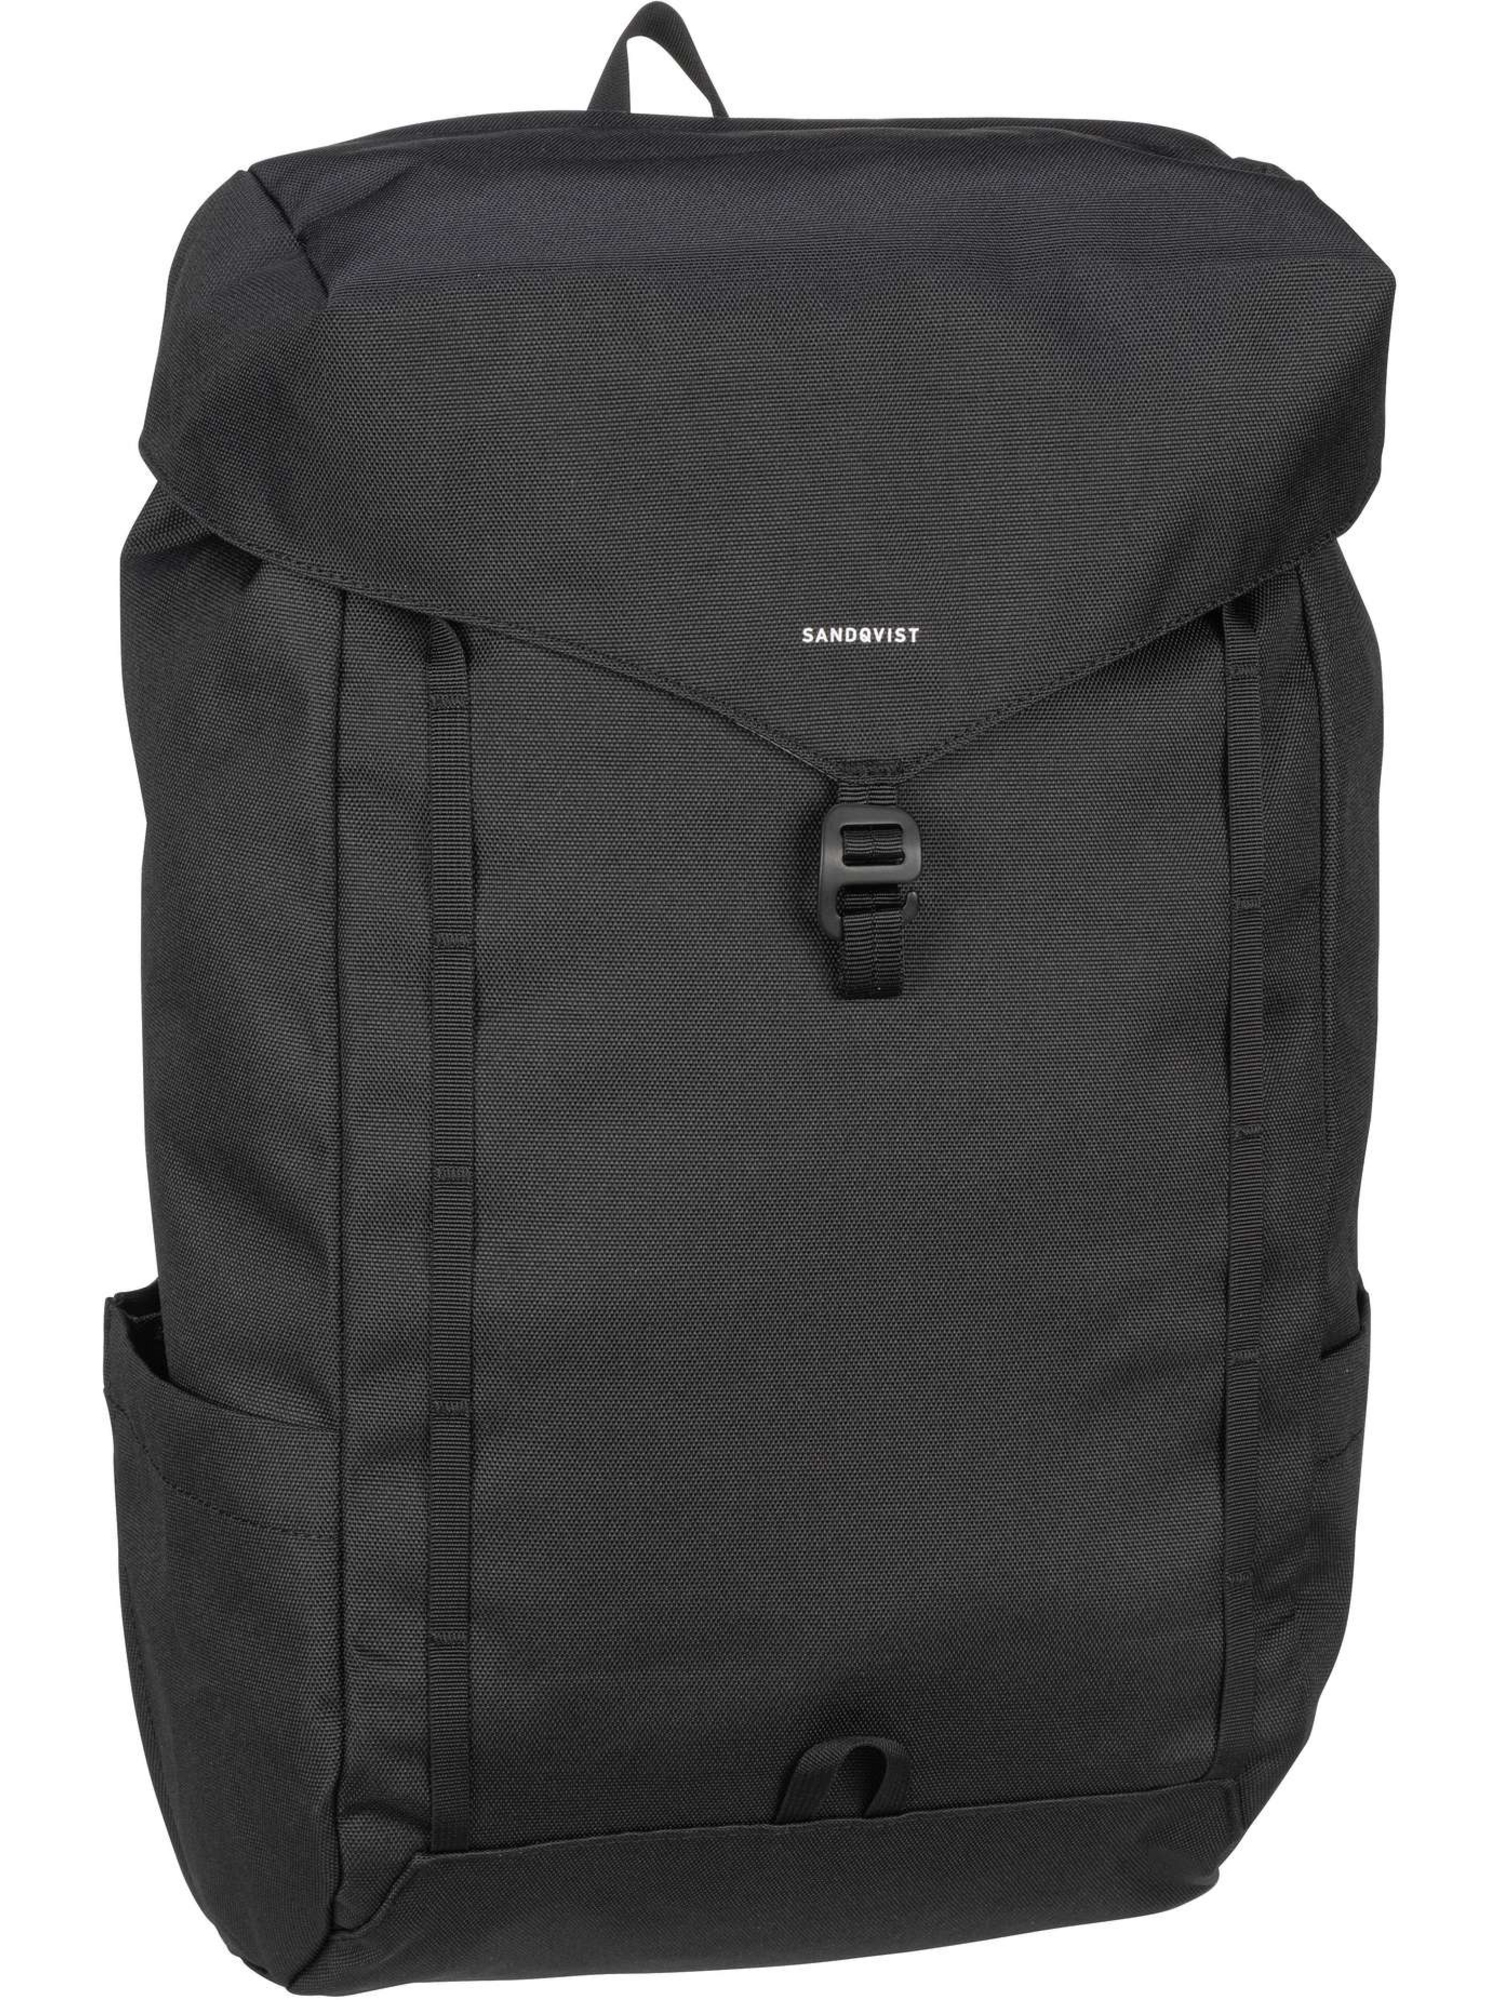 Рюкзак SANDQVIST/Backpack Walter Backpack, черный рюкзак sandqvist walter brown